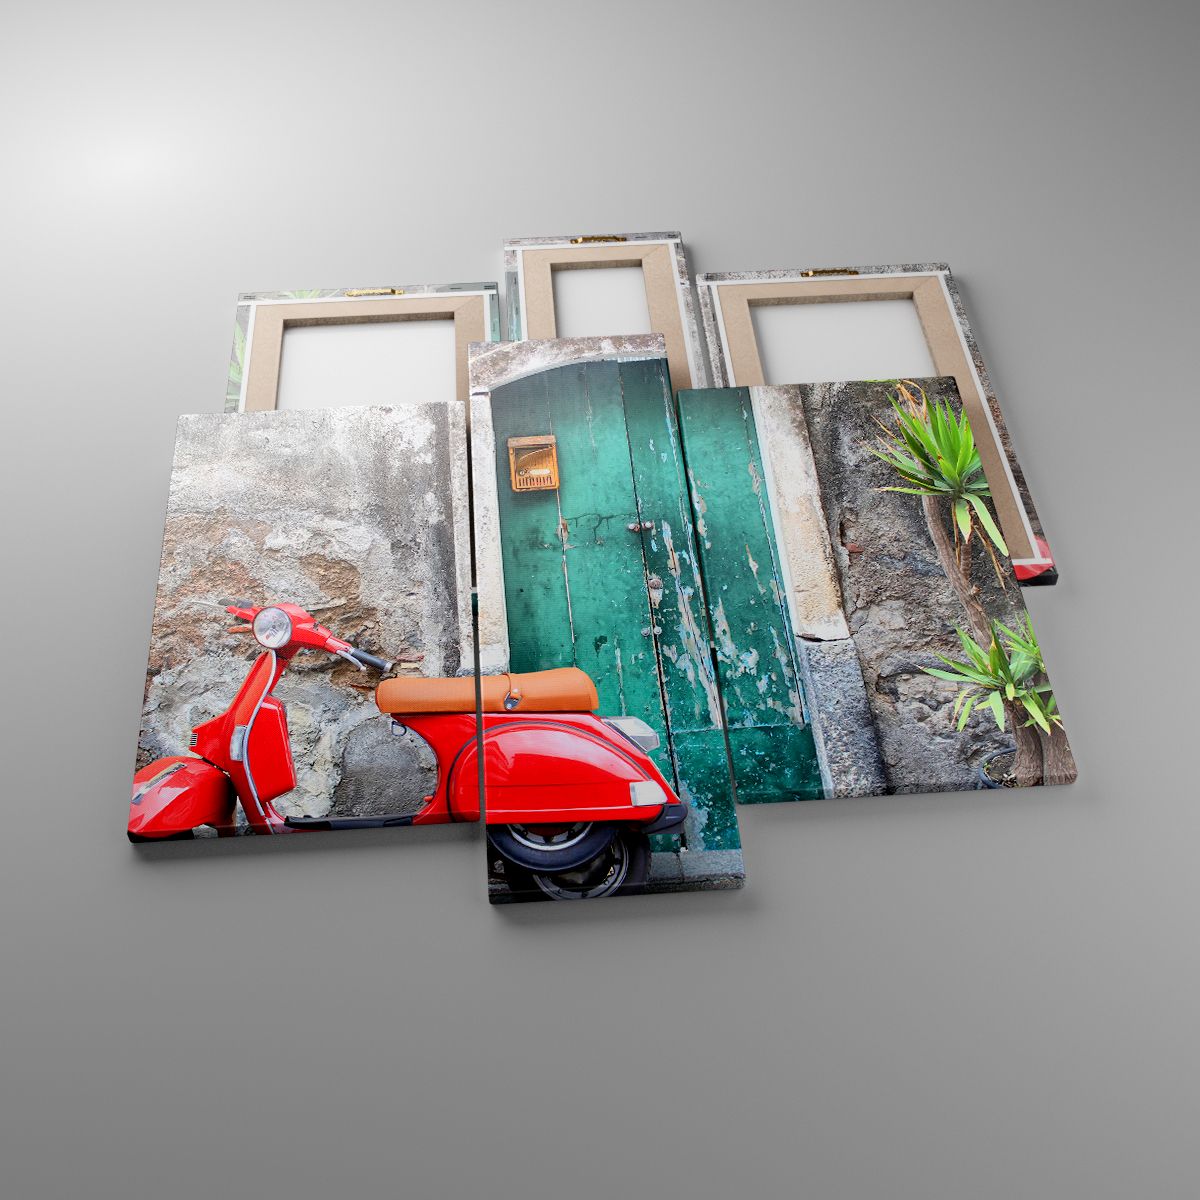 Leinwandbild Automobil, Leinwandbild Roller, Leinwandbild Italien, Leinwandbild Rotes Motorrad, Leinwandbild Geheimnisvolle Tür